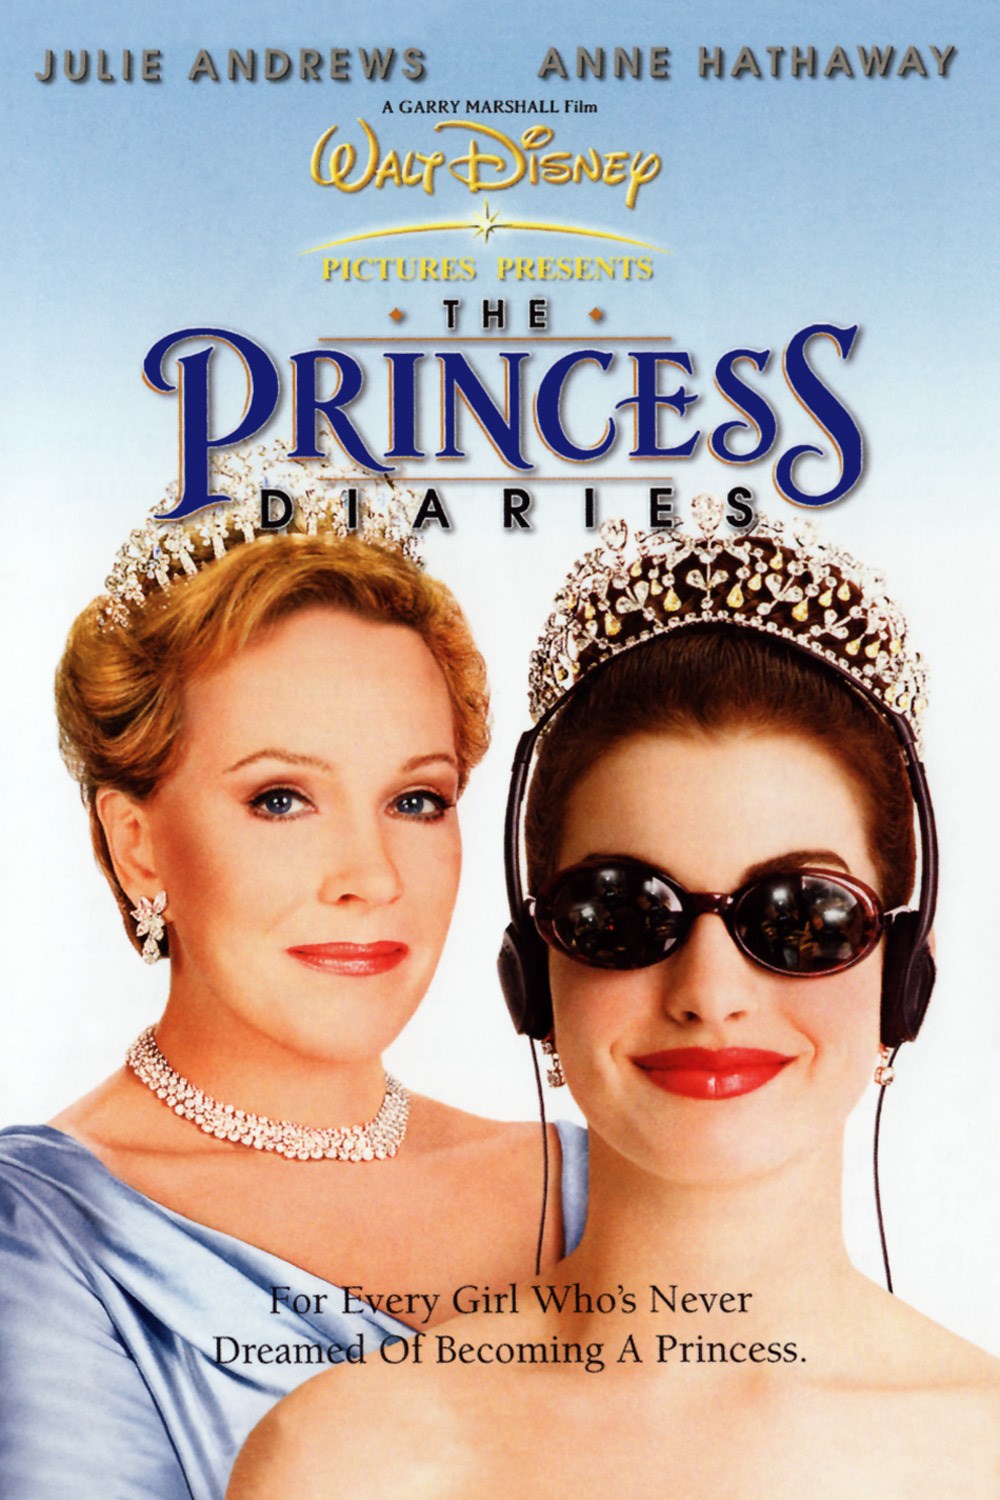 The Princess Diaries (2001) Princess diaries, The